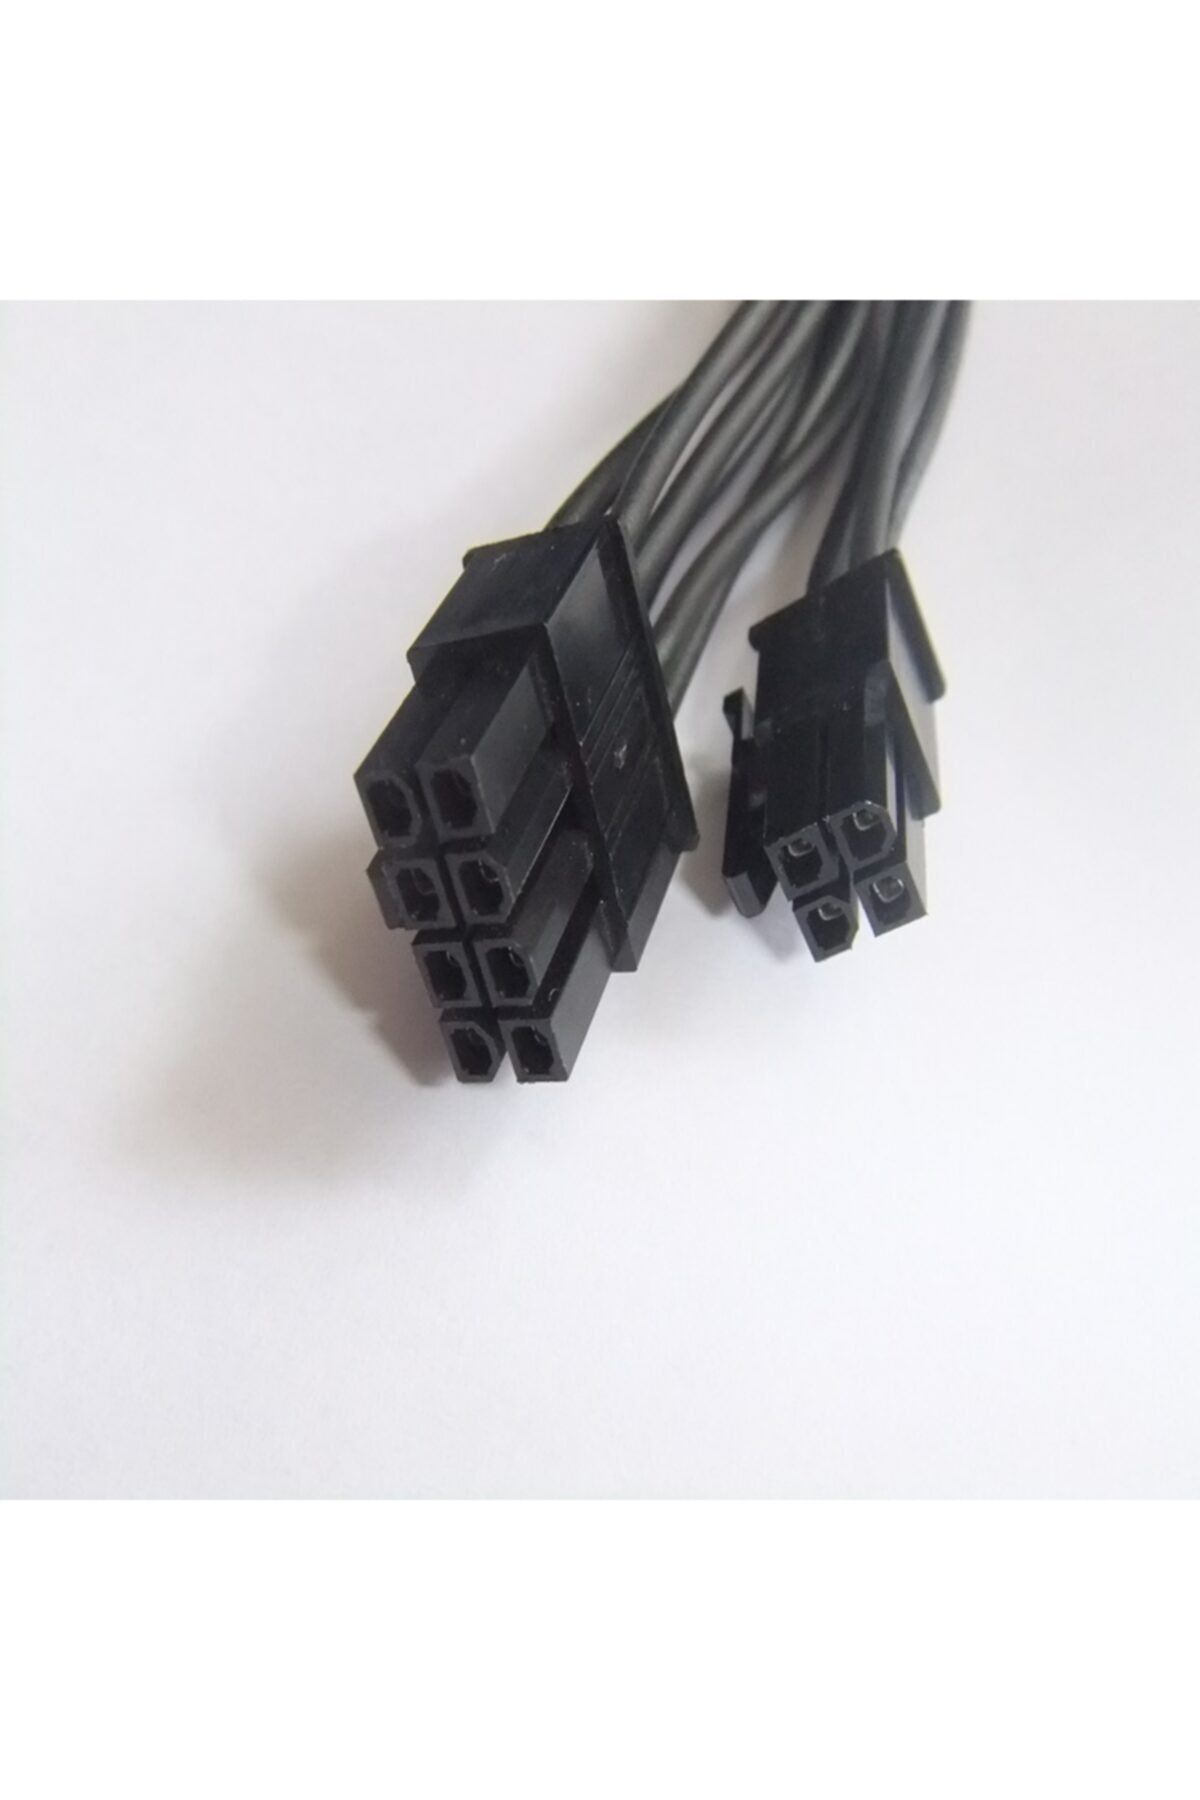 OEM 8+4 Pin Cpu Çoklayıcı Kablo